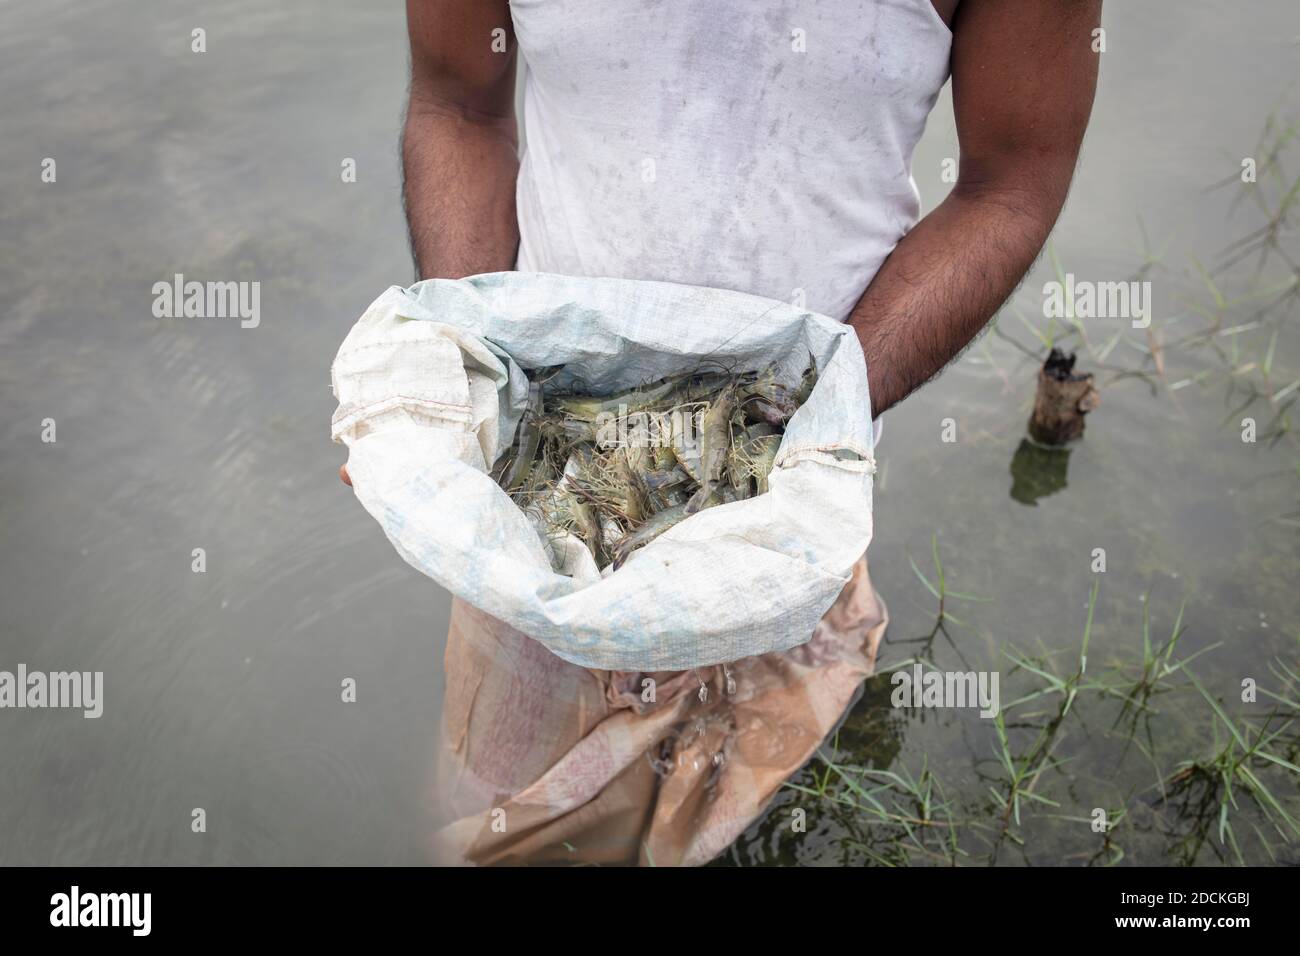 A man looks at harvested shrimps (Penaeus monodon) on a farm in an open sack, shrimps are farmed in the Ganges delta, Mongla, Sundarbans, Bangladesh Stock Photo